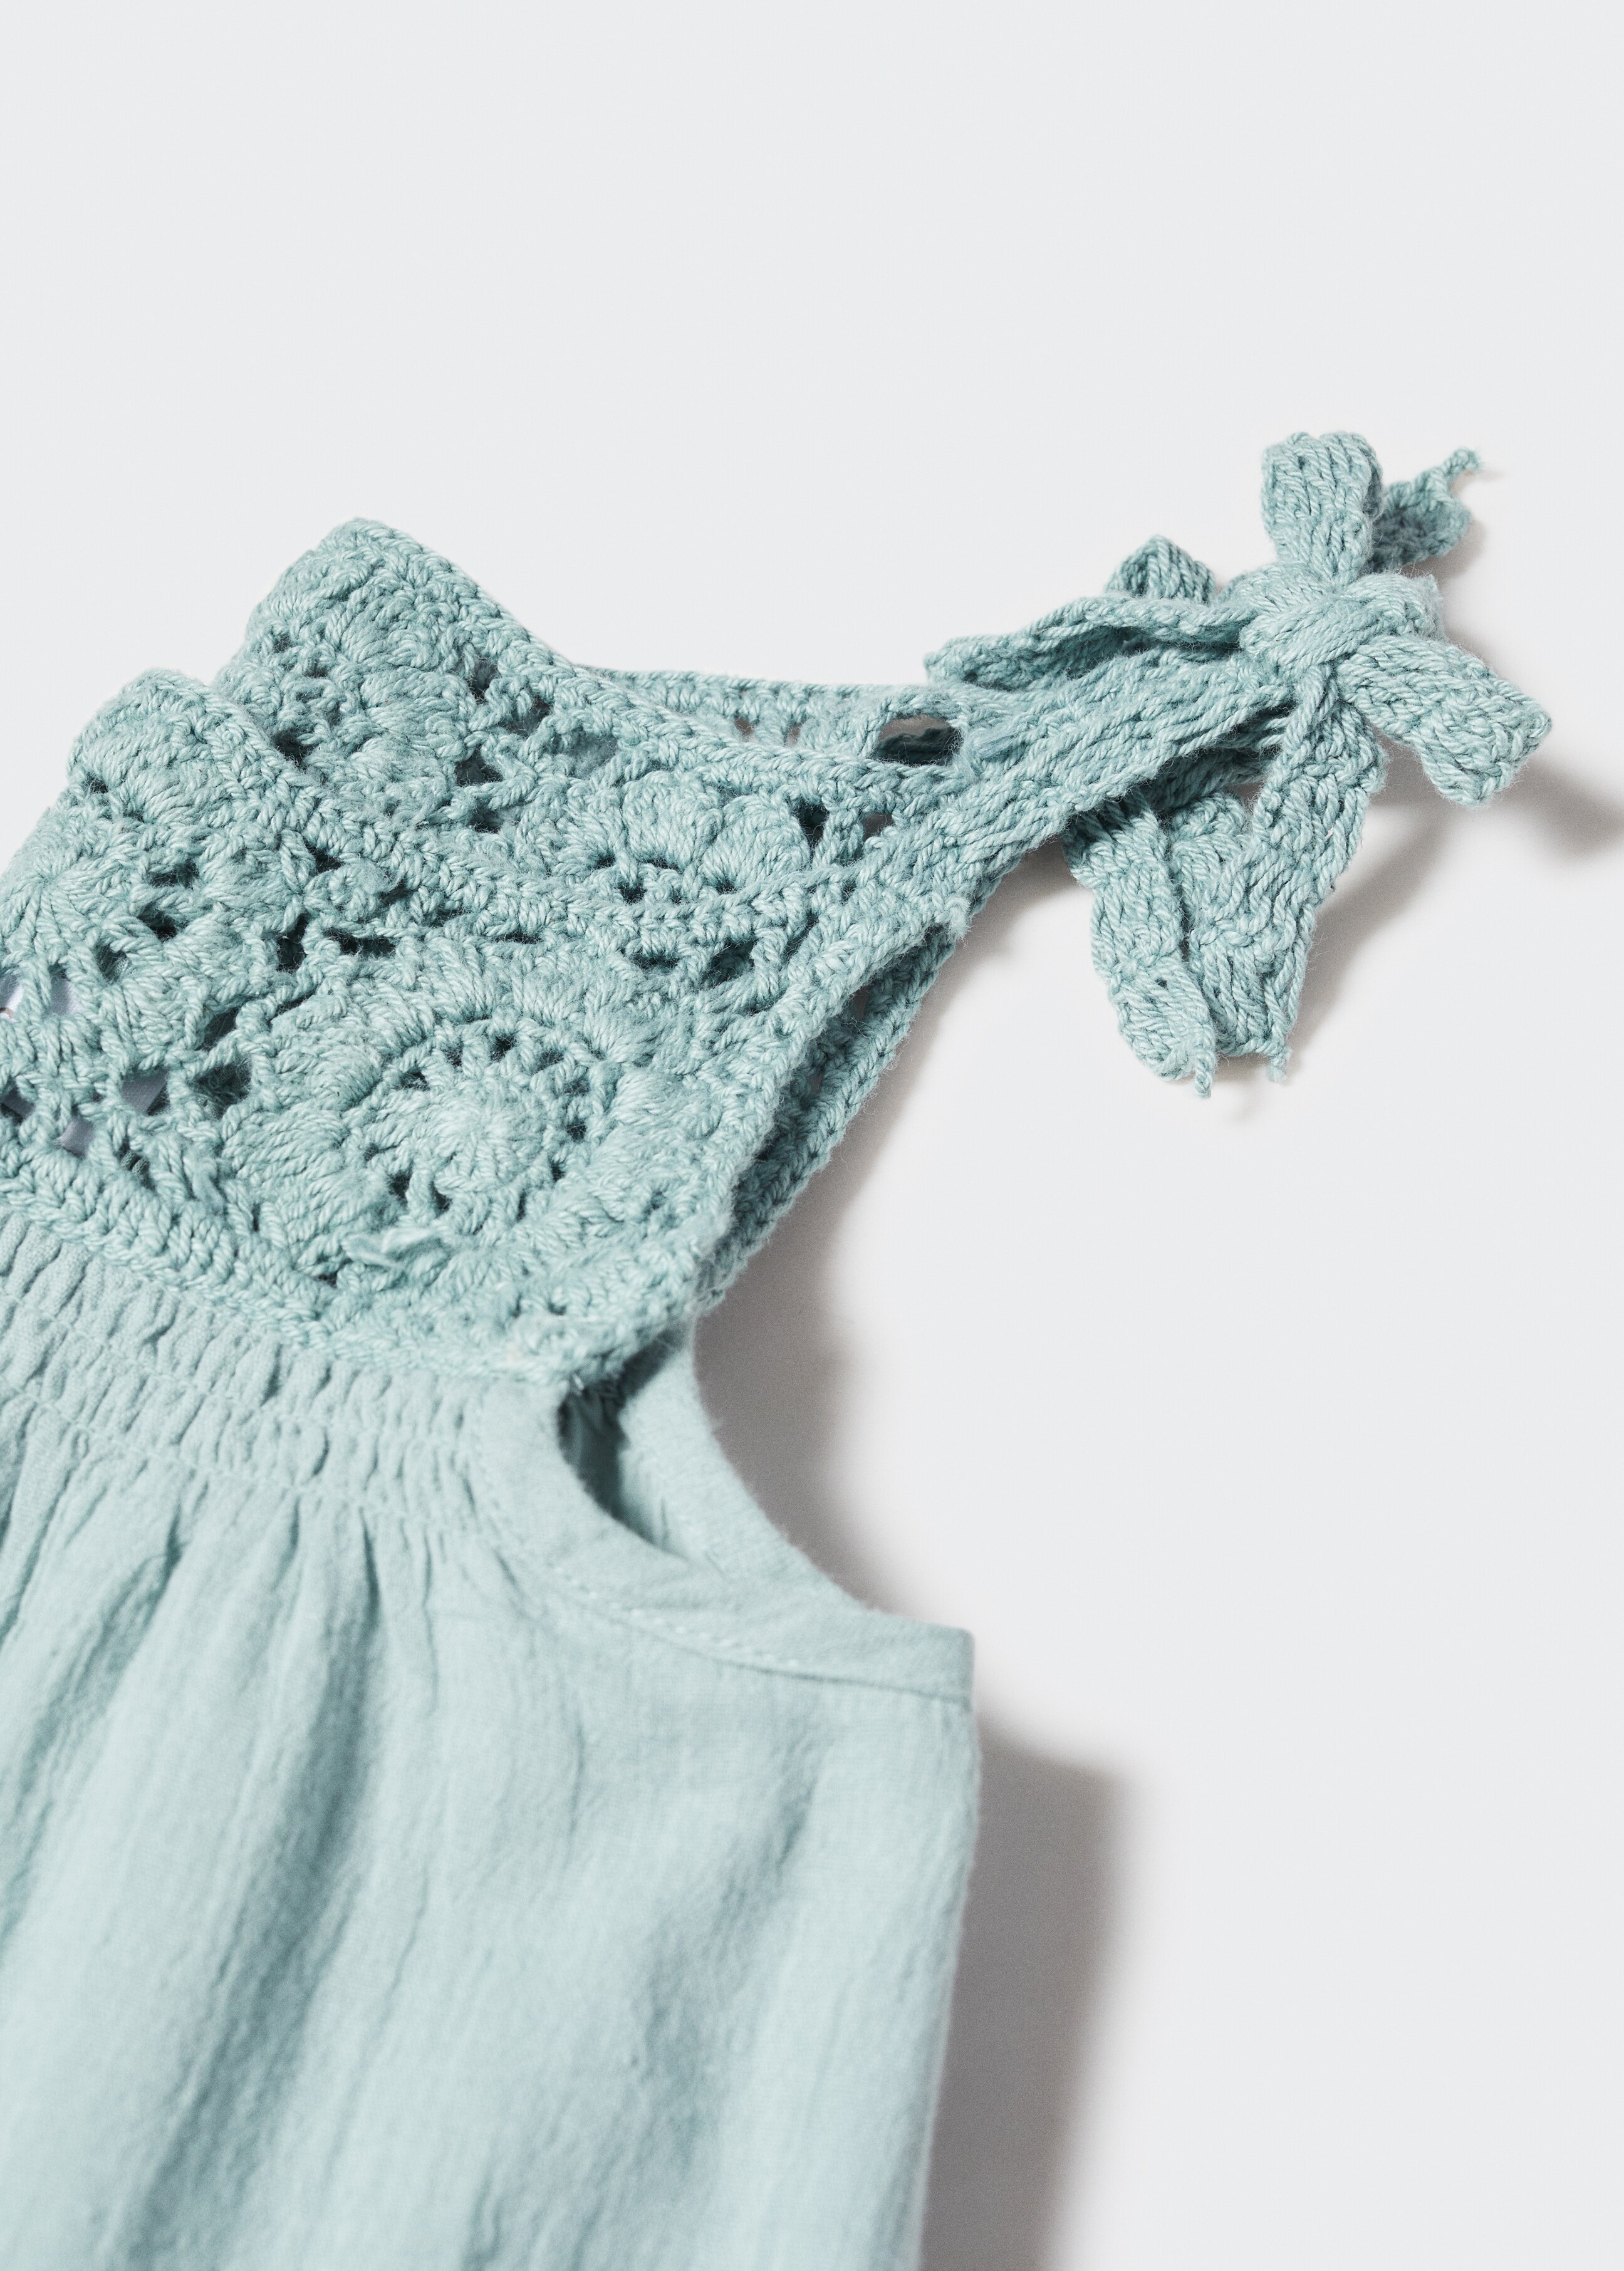 Crochet cotton dress - Details of the article 8